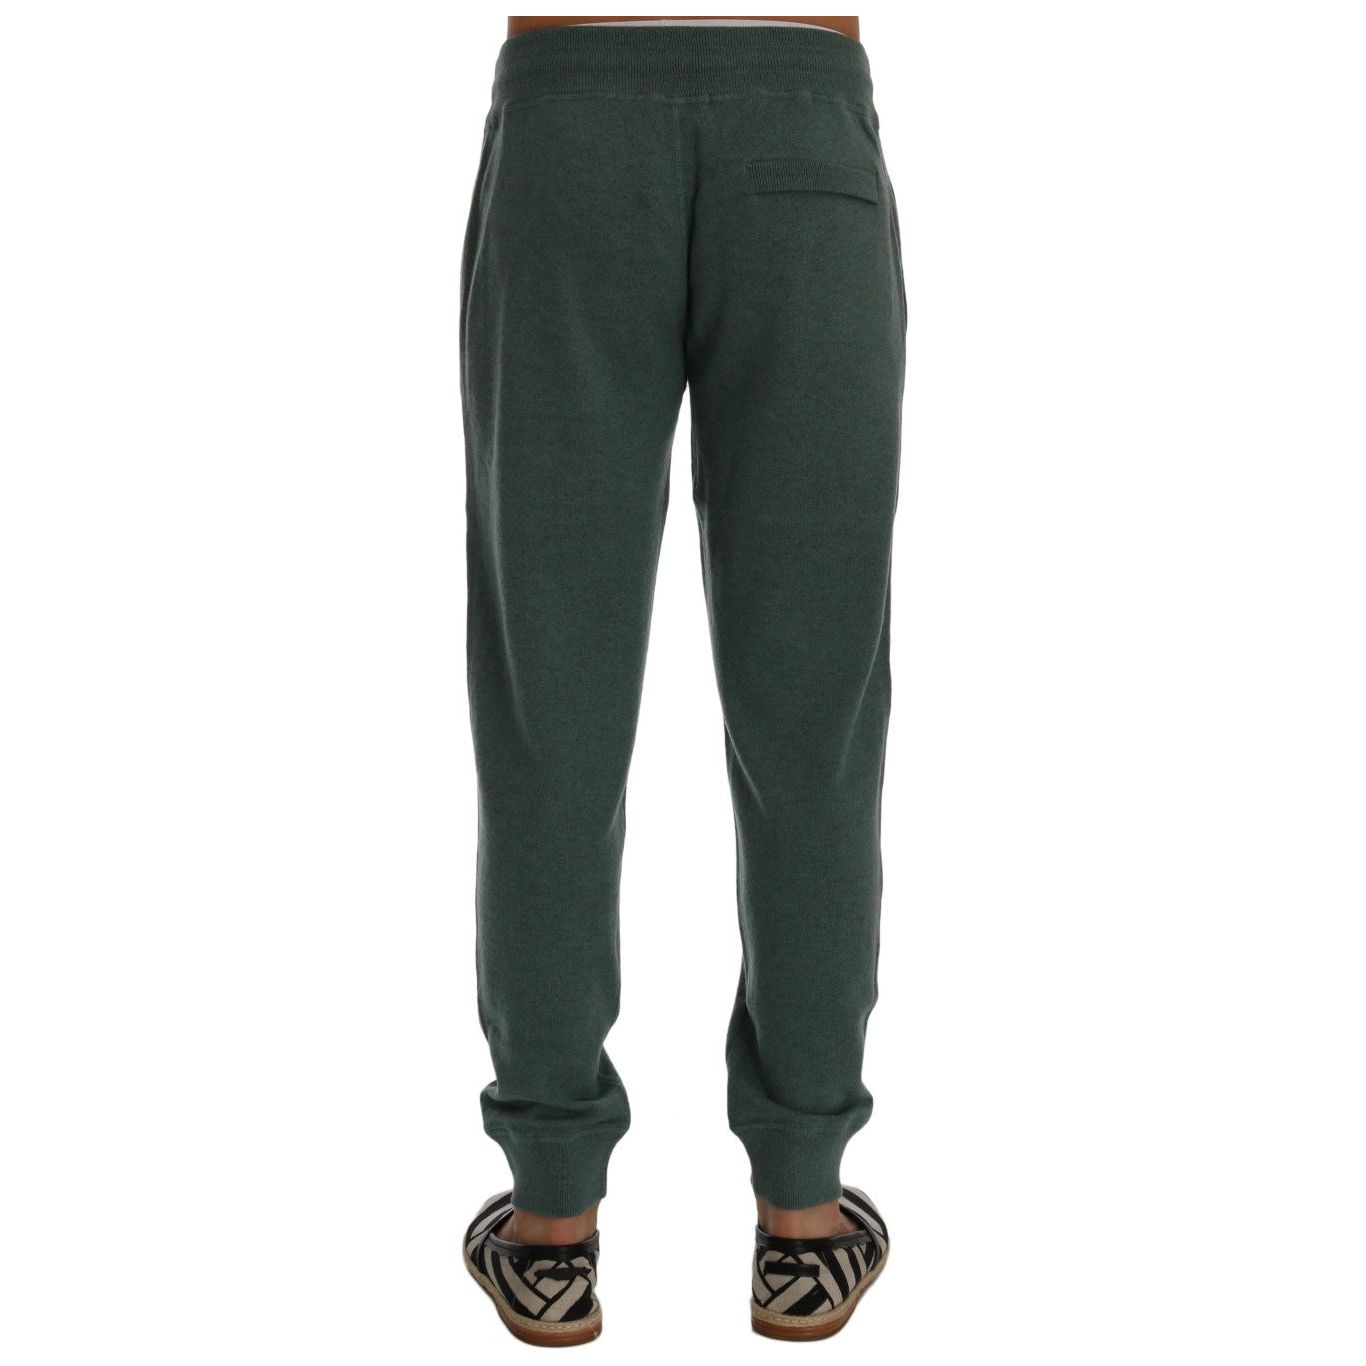 Dolce & Gabbana Elegant Green Cashmere Sport Pants green-cashmere-training-pants 346330-green-cashmere-training-pants-2.jpg